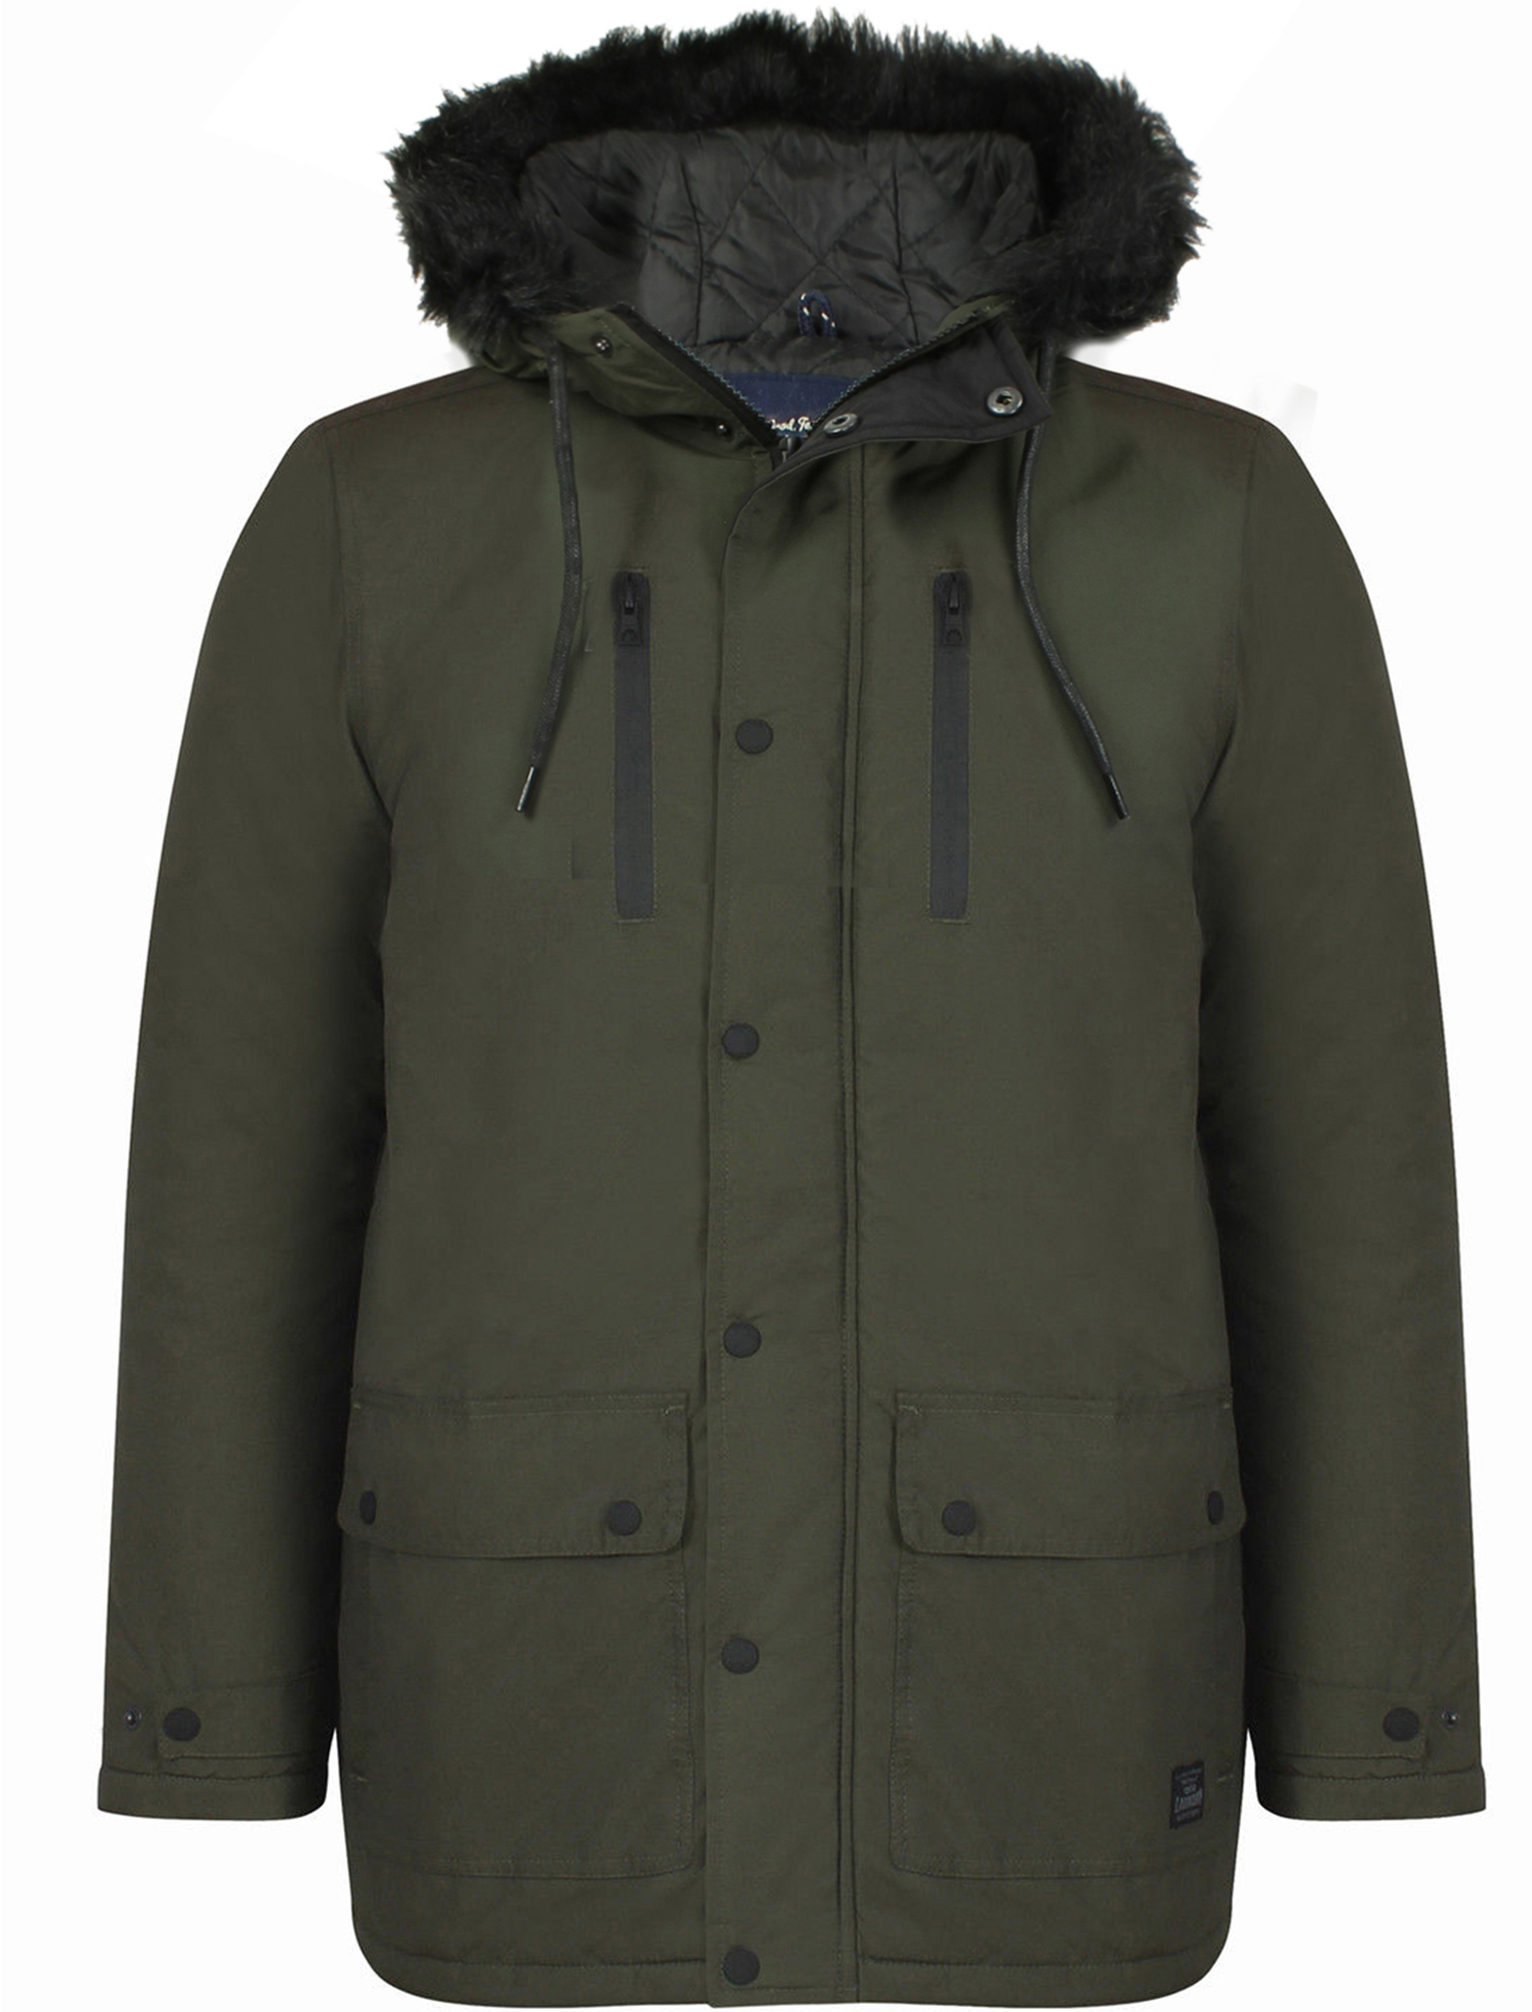 Tokyo Mens Parka Coat Multi Fur Trim Hood Utility Jacket eBay